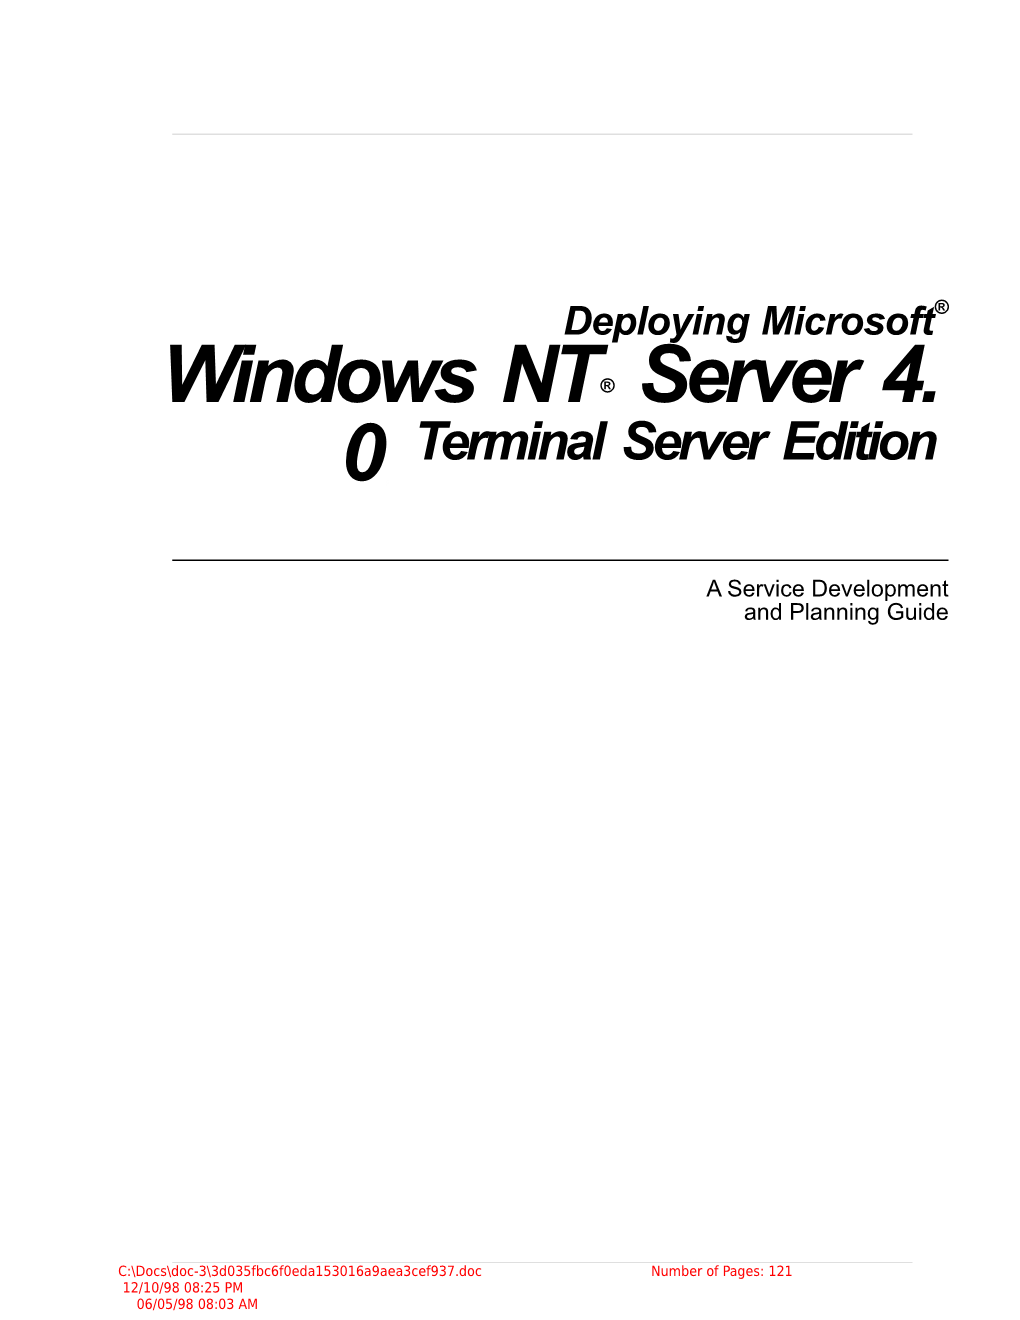 Deploying Microsoft Windows NT Server 4.0, Terminal Server Edition